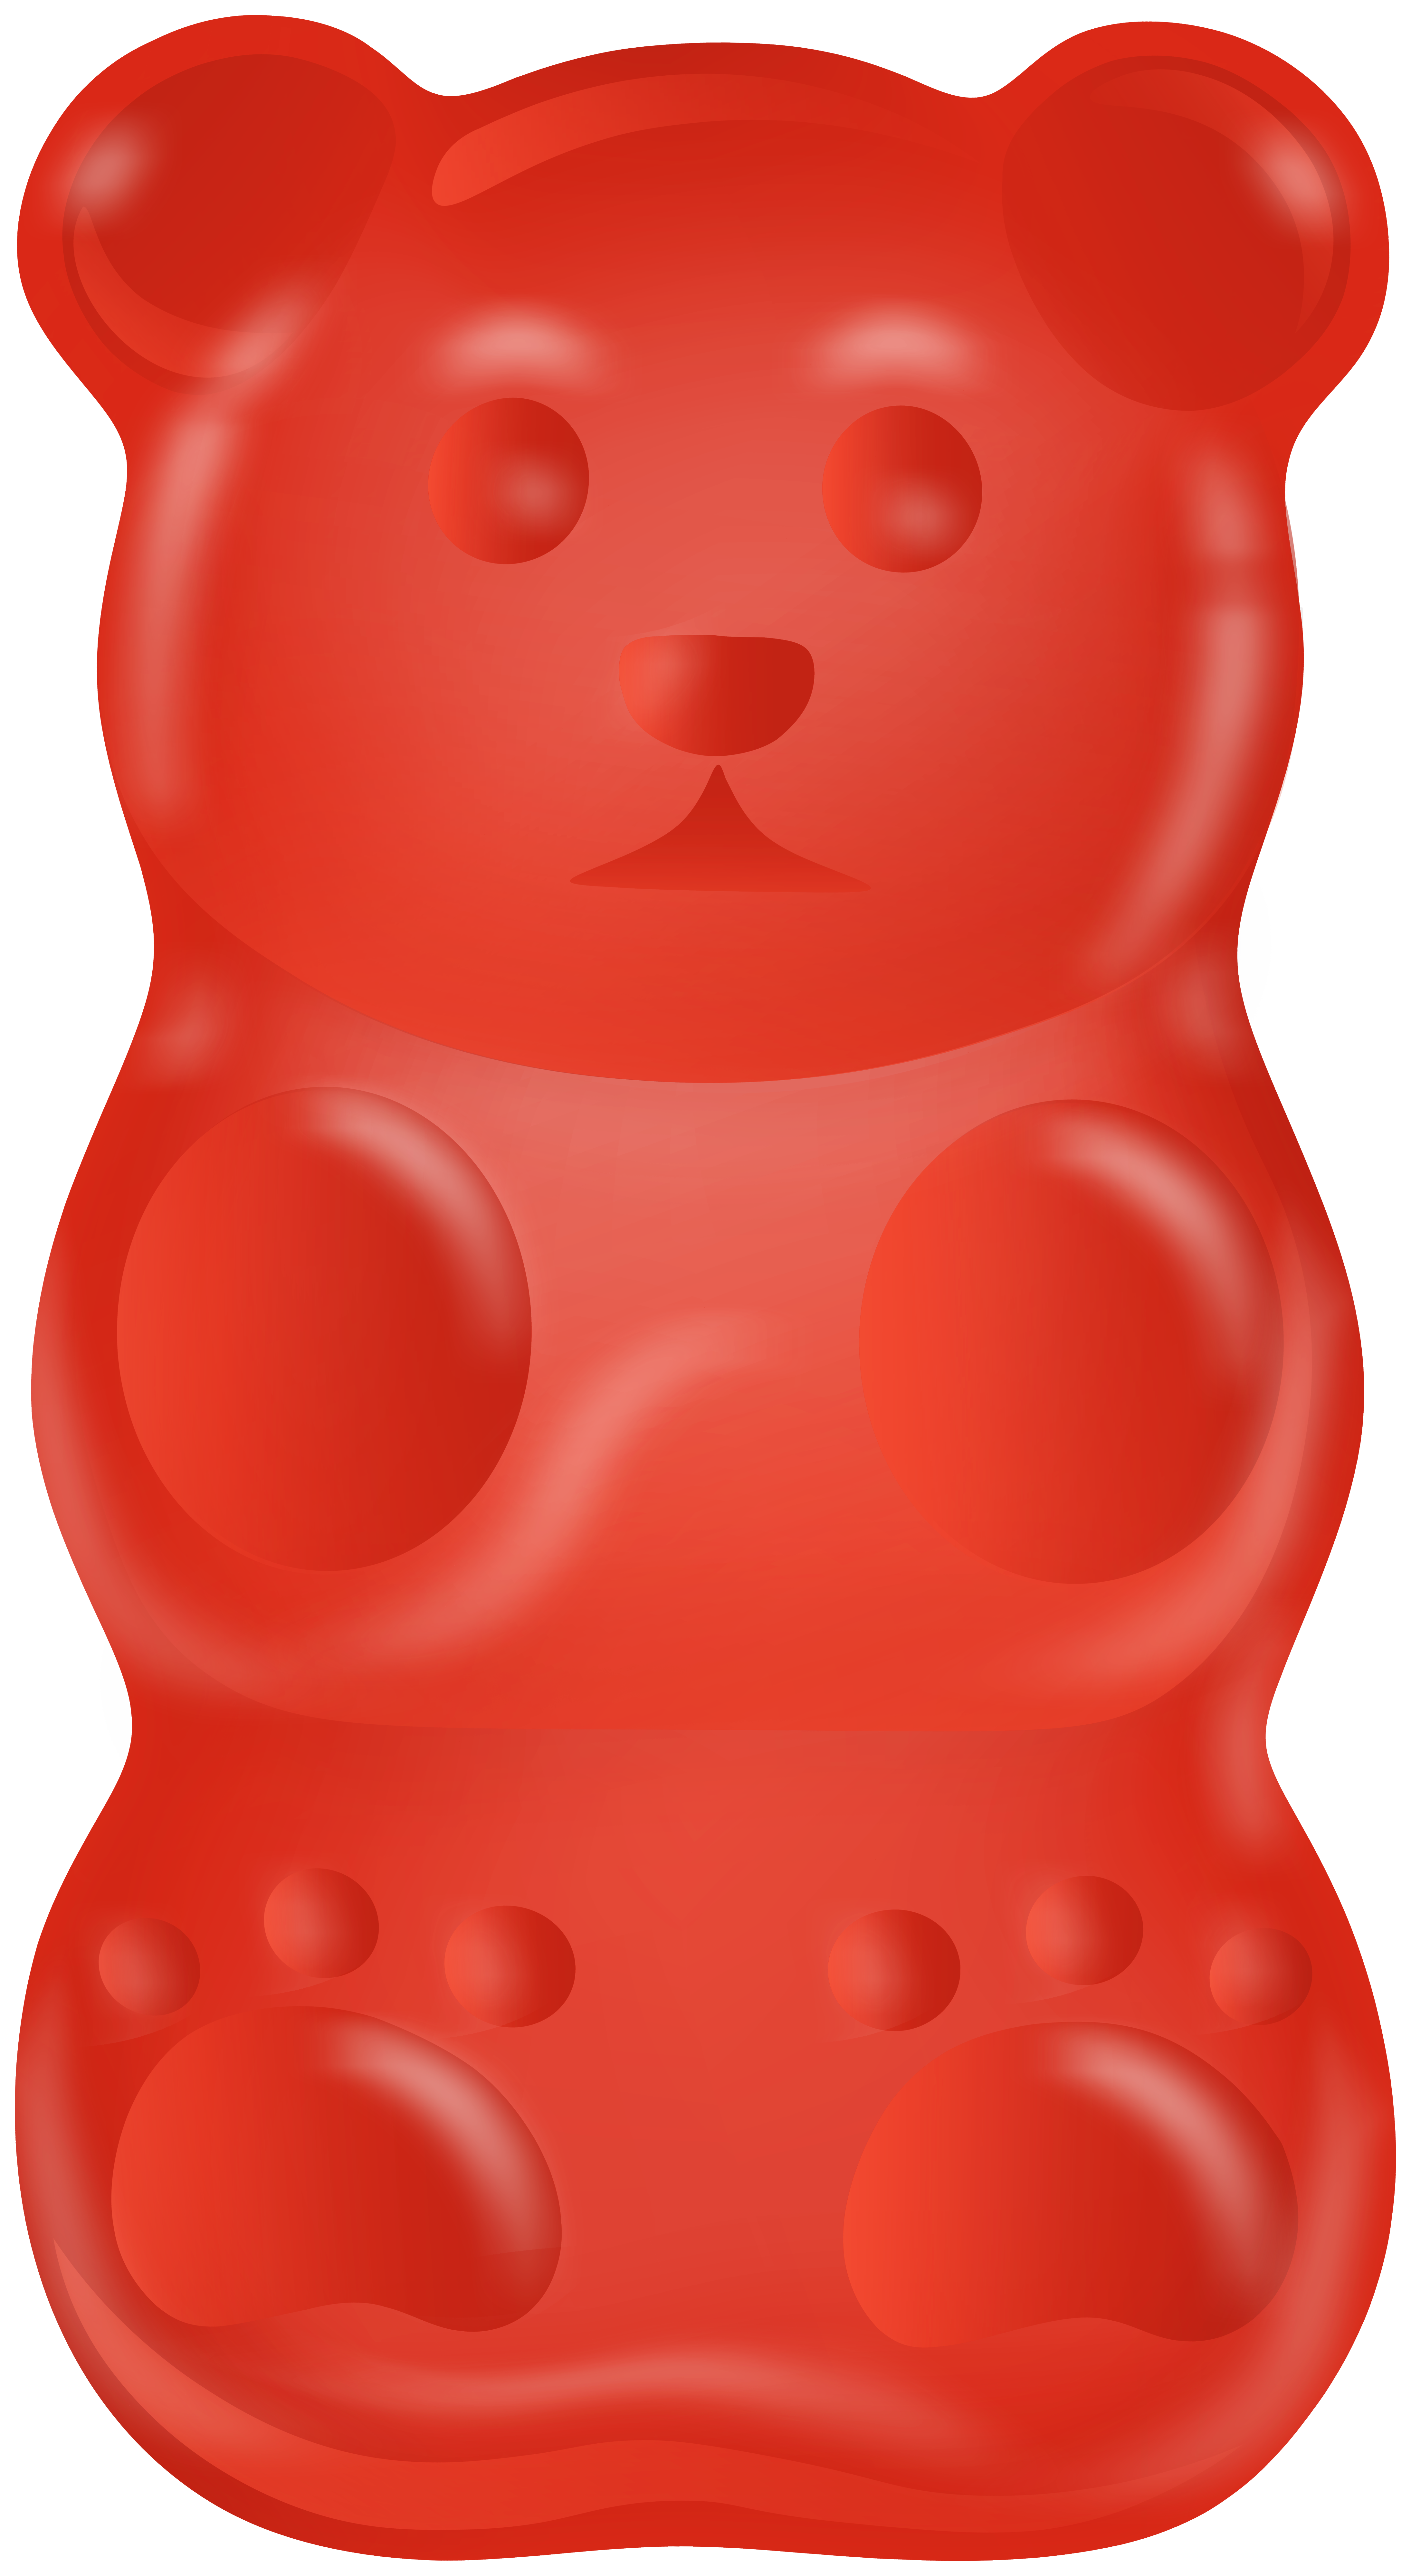 Gummy Bears PNG Transparent Images Free Download